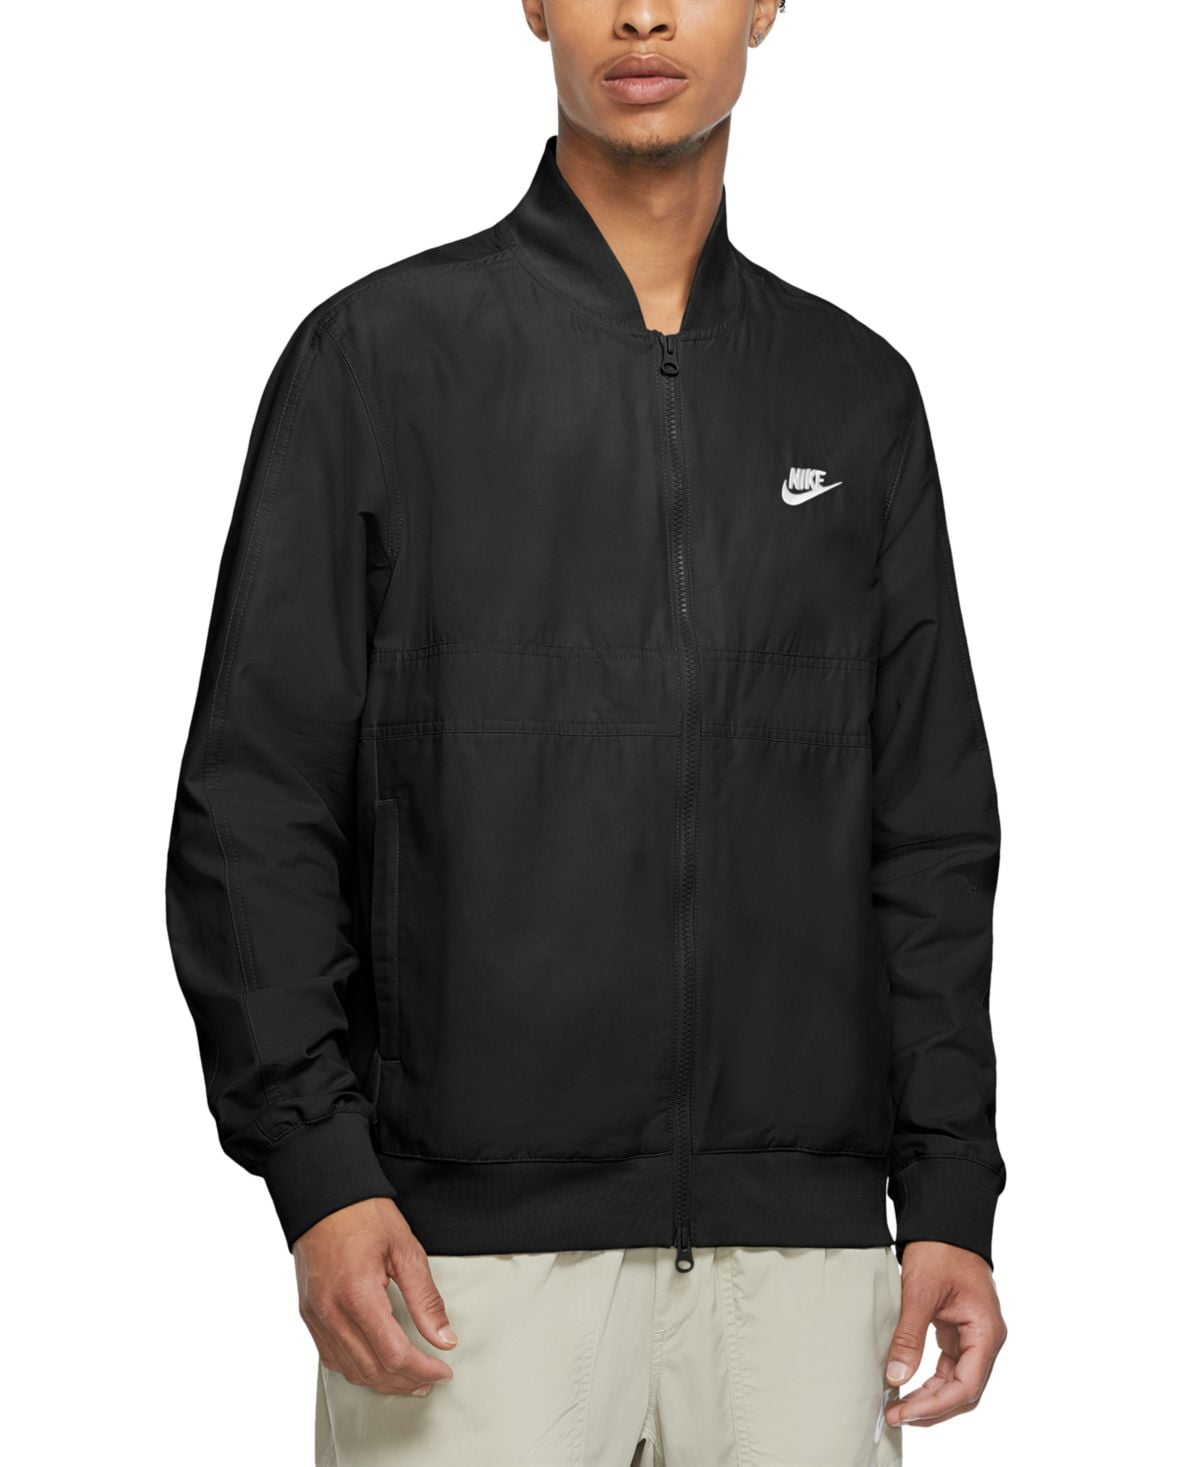 Nike Mens Player Jacket,Black/White,X-Large - Walmart.com